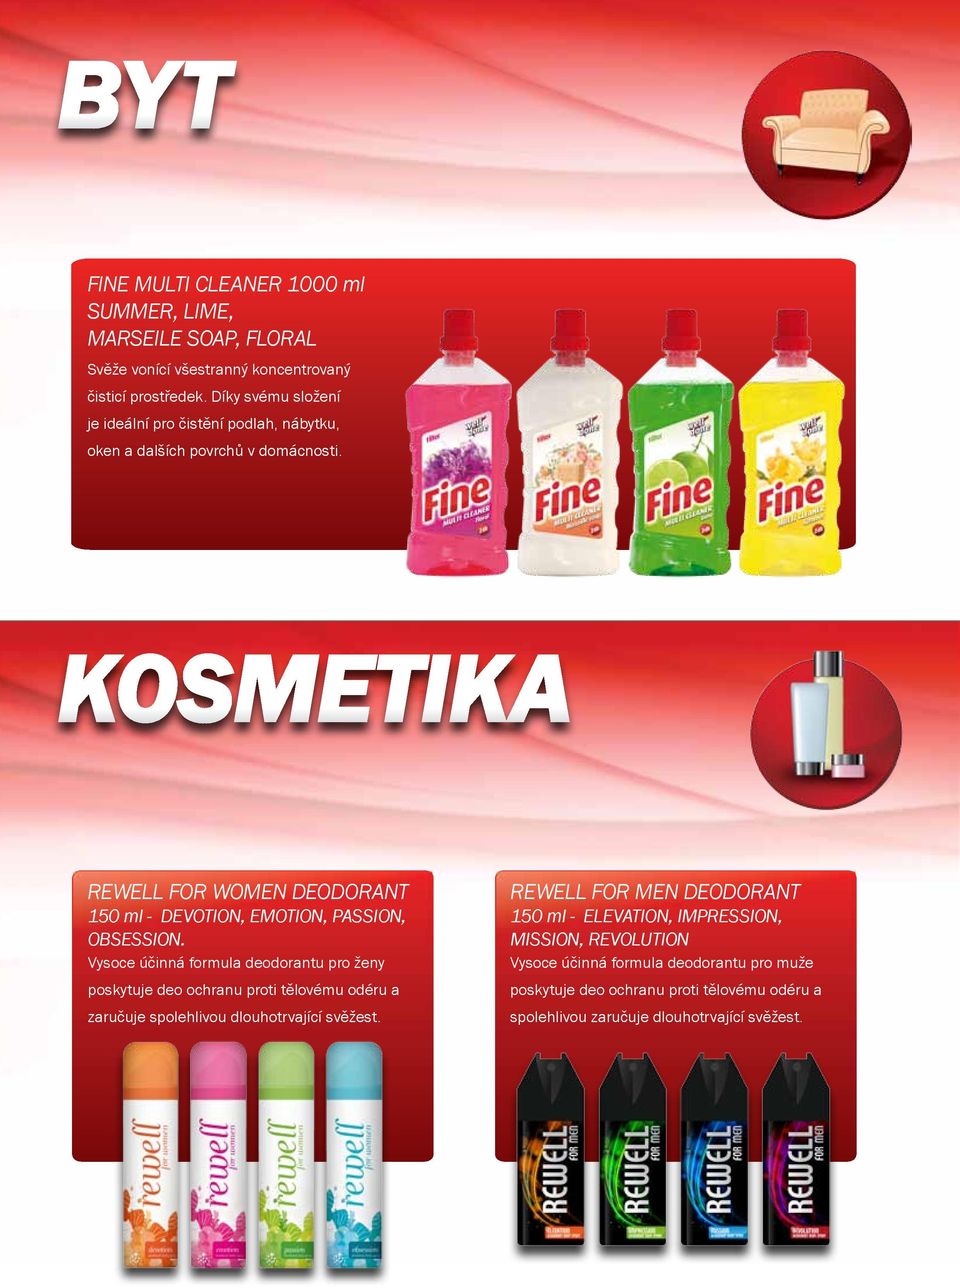 KoSmETika Rewell FOr WOmen deodorant 150 ml - Devotion, Emotion, Passion, Obsession.